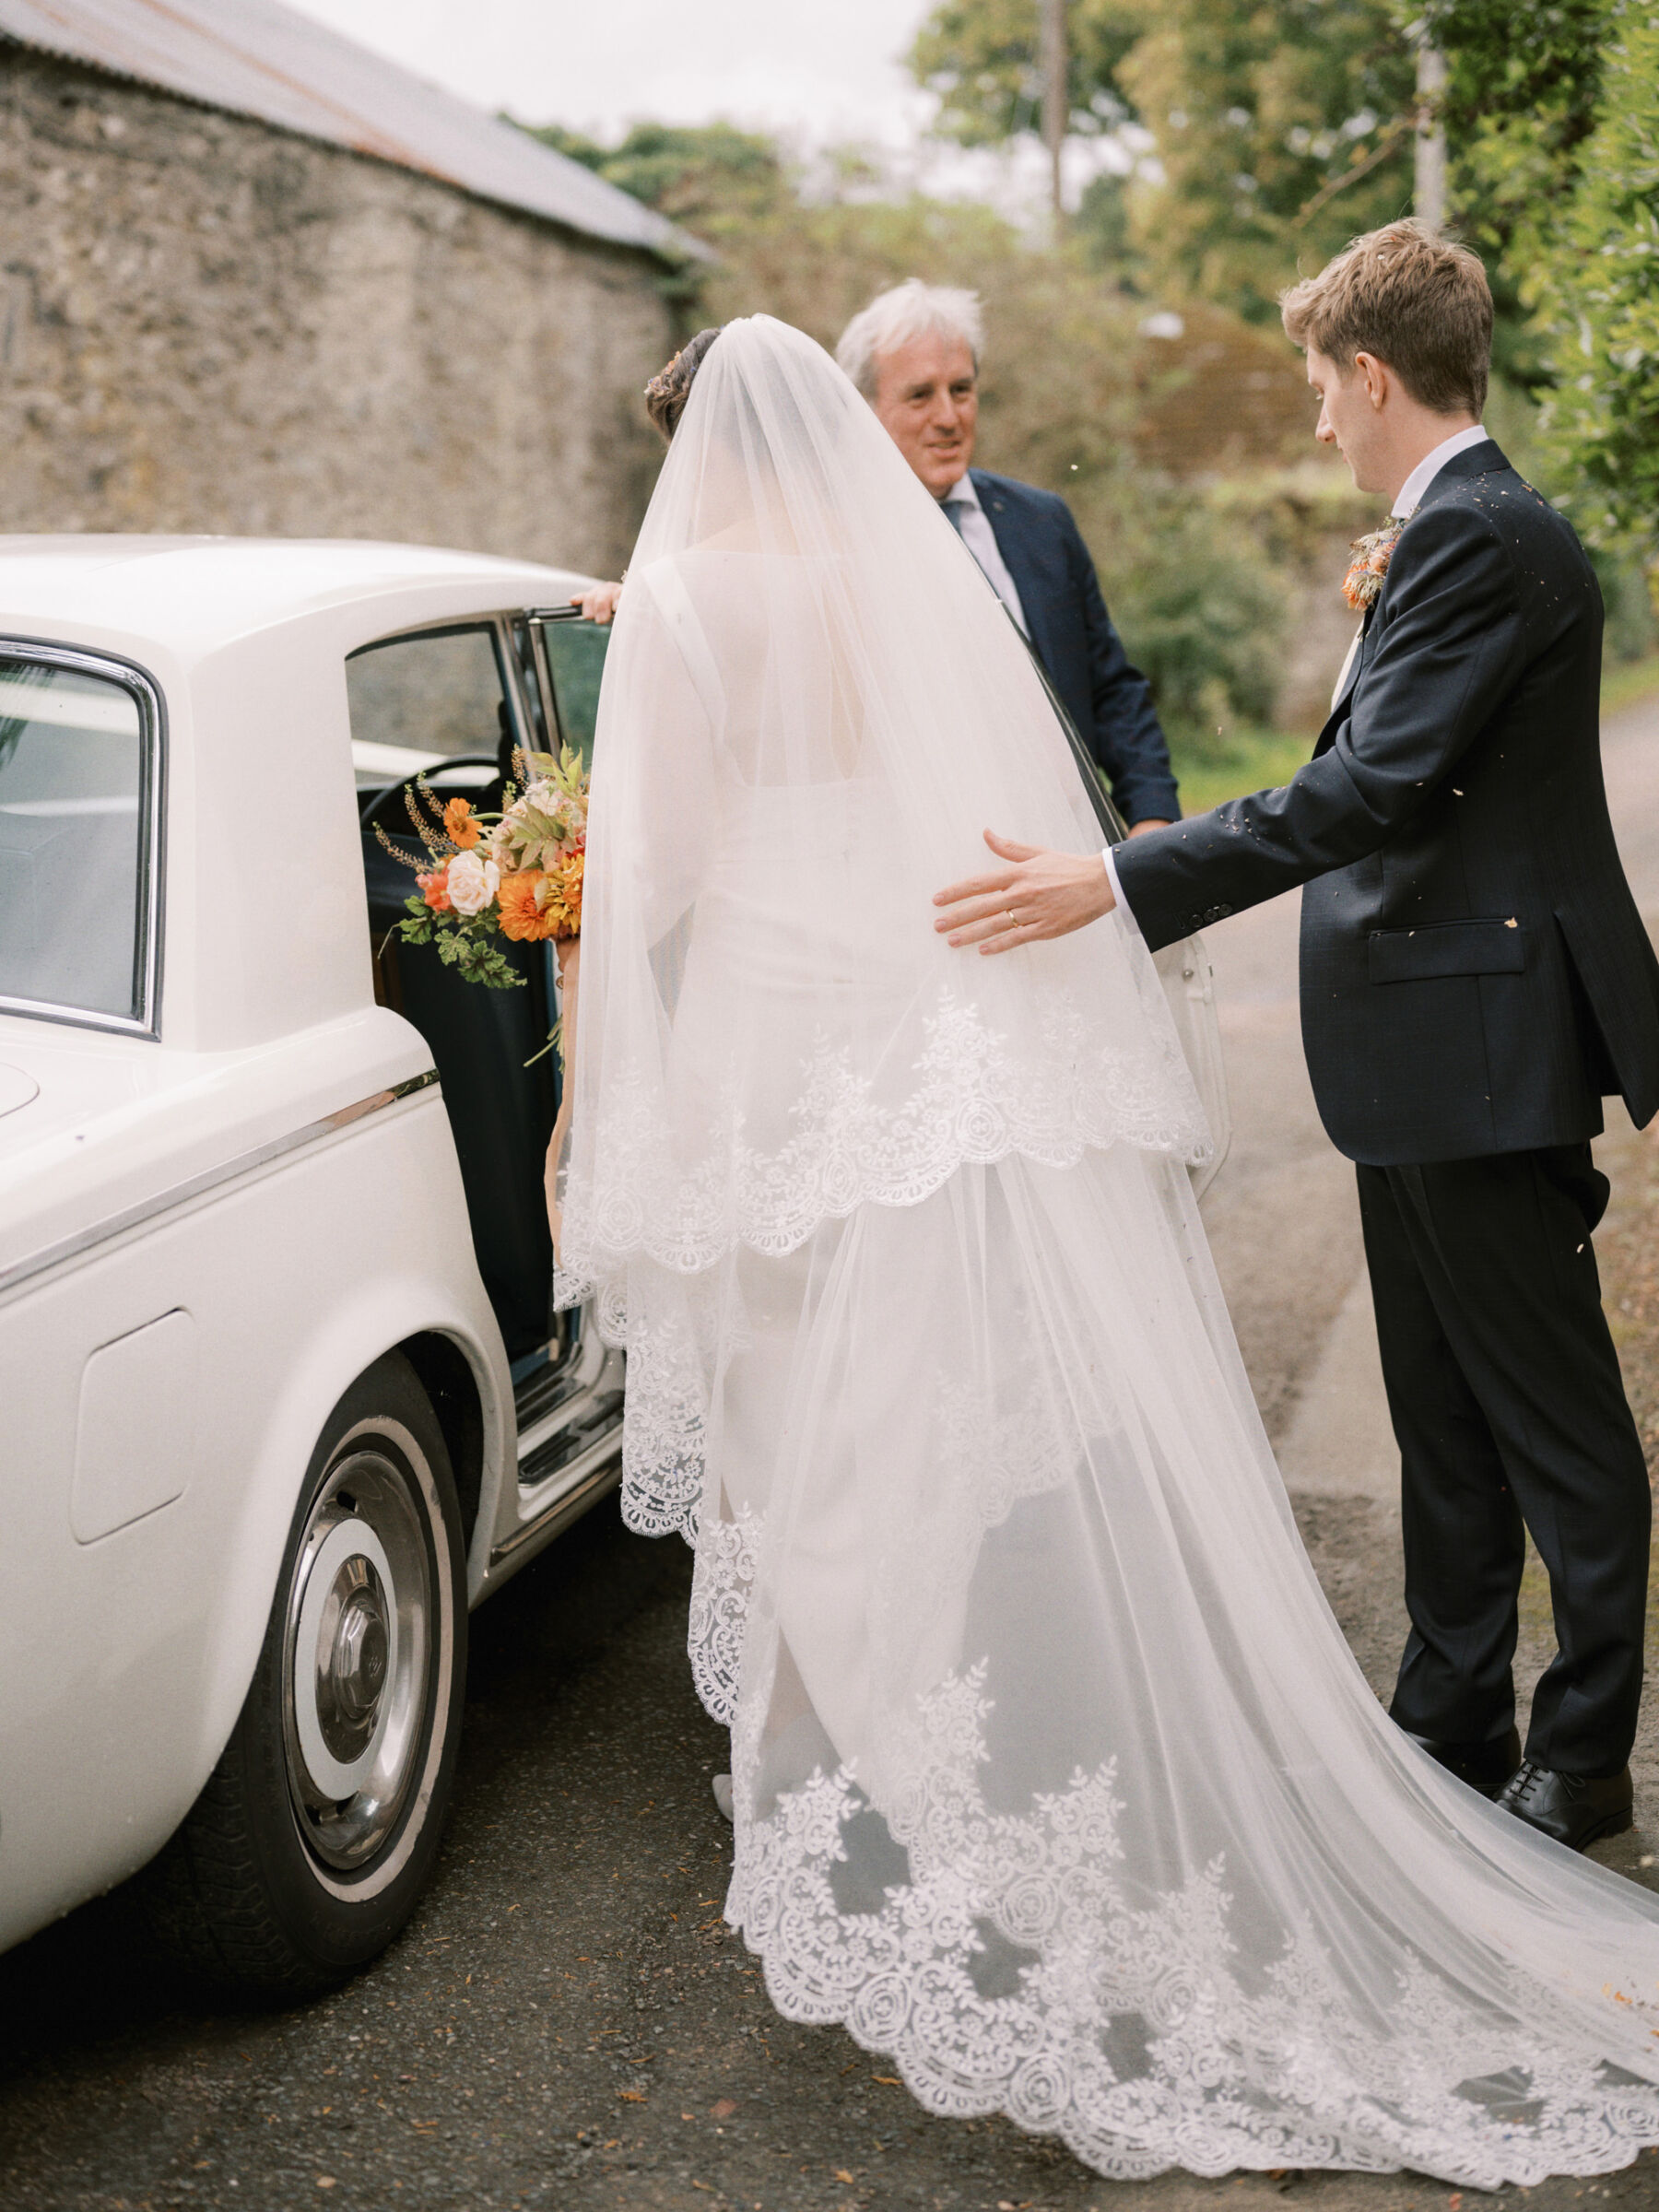 Andrea Hawkes Bridal wedding dress and veil